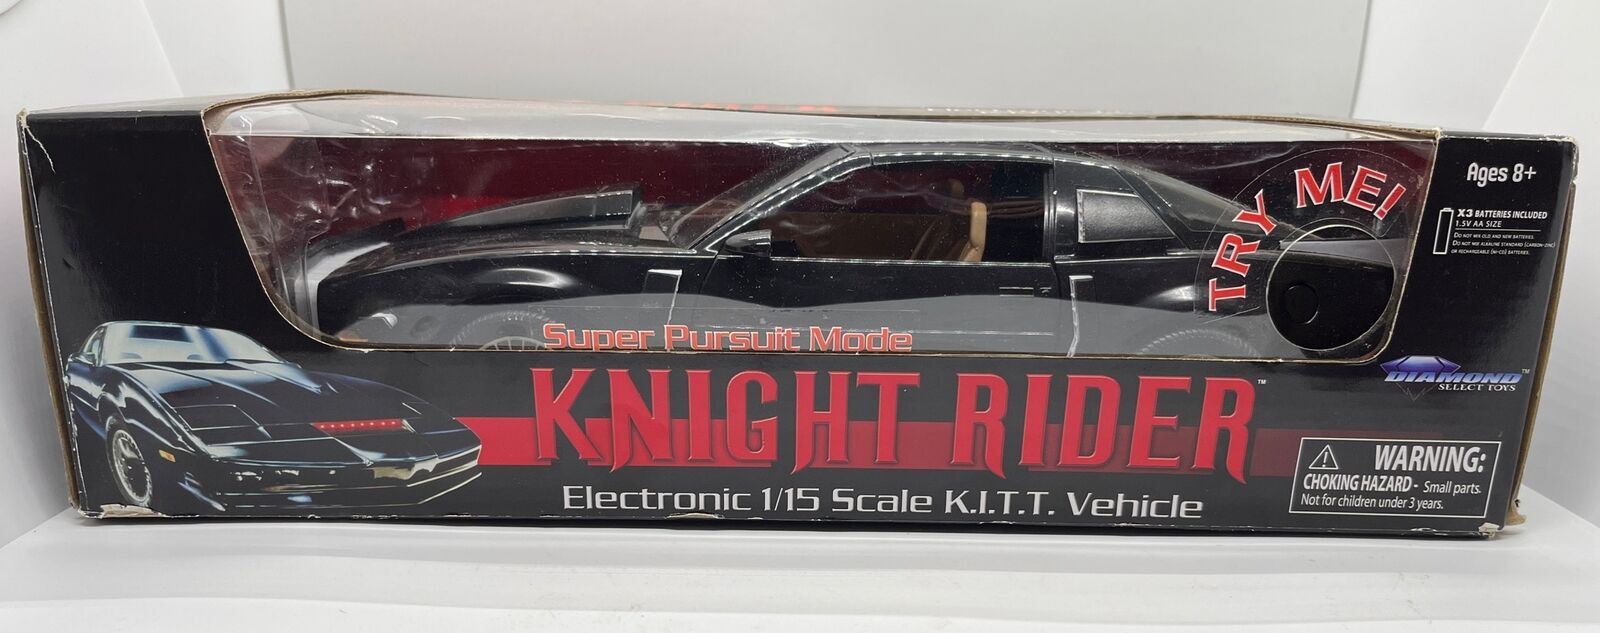 Knight Rider Electronic 1:15 Scale KITT With Michael Knight 2012 Diamond Select